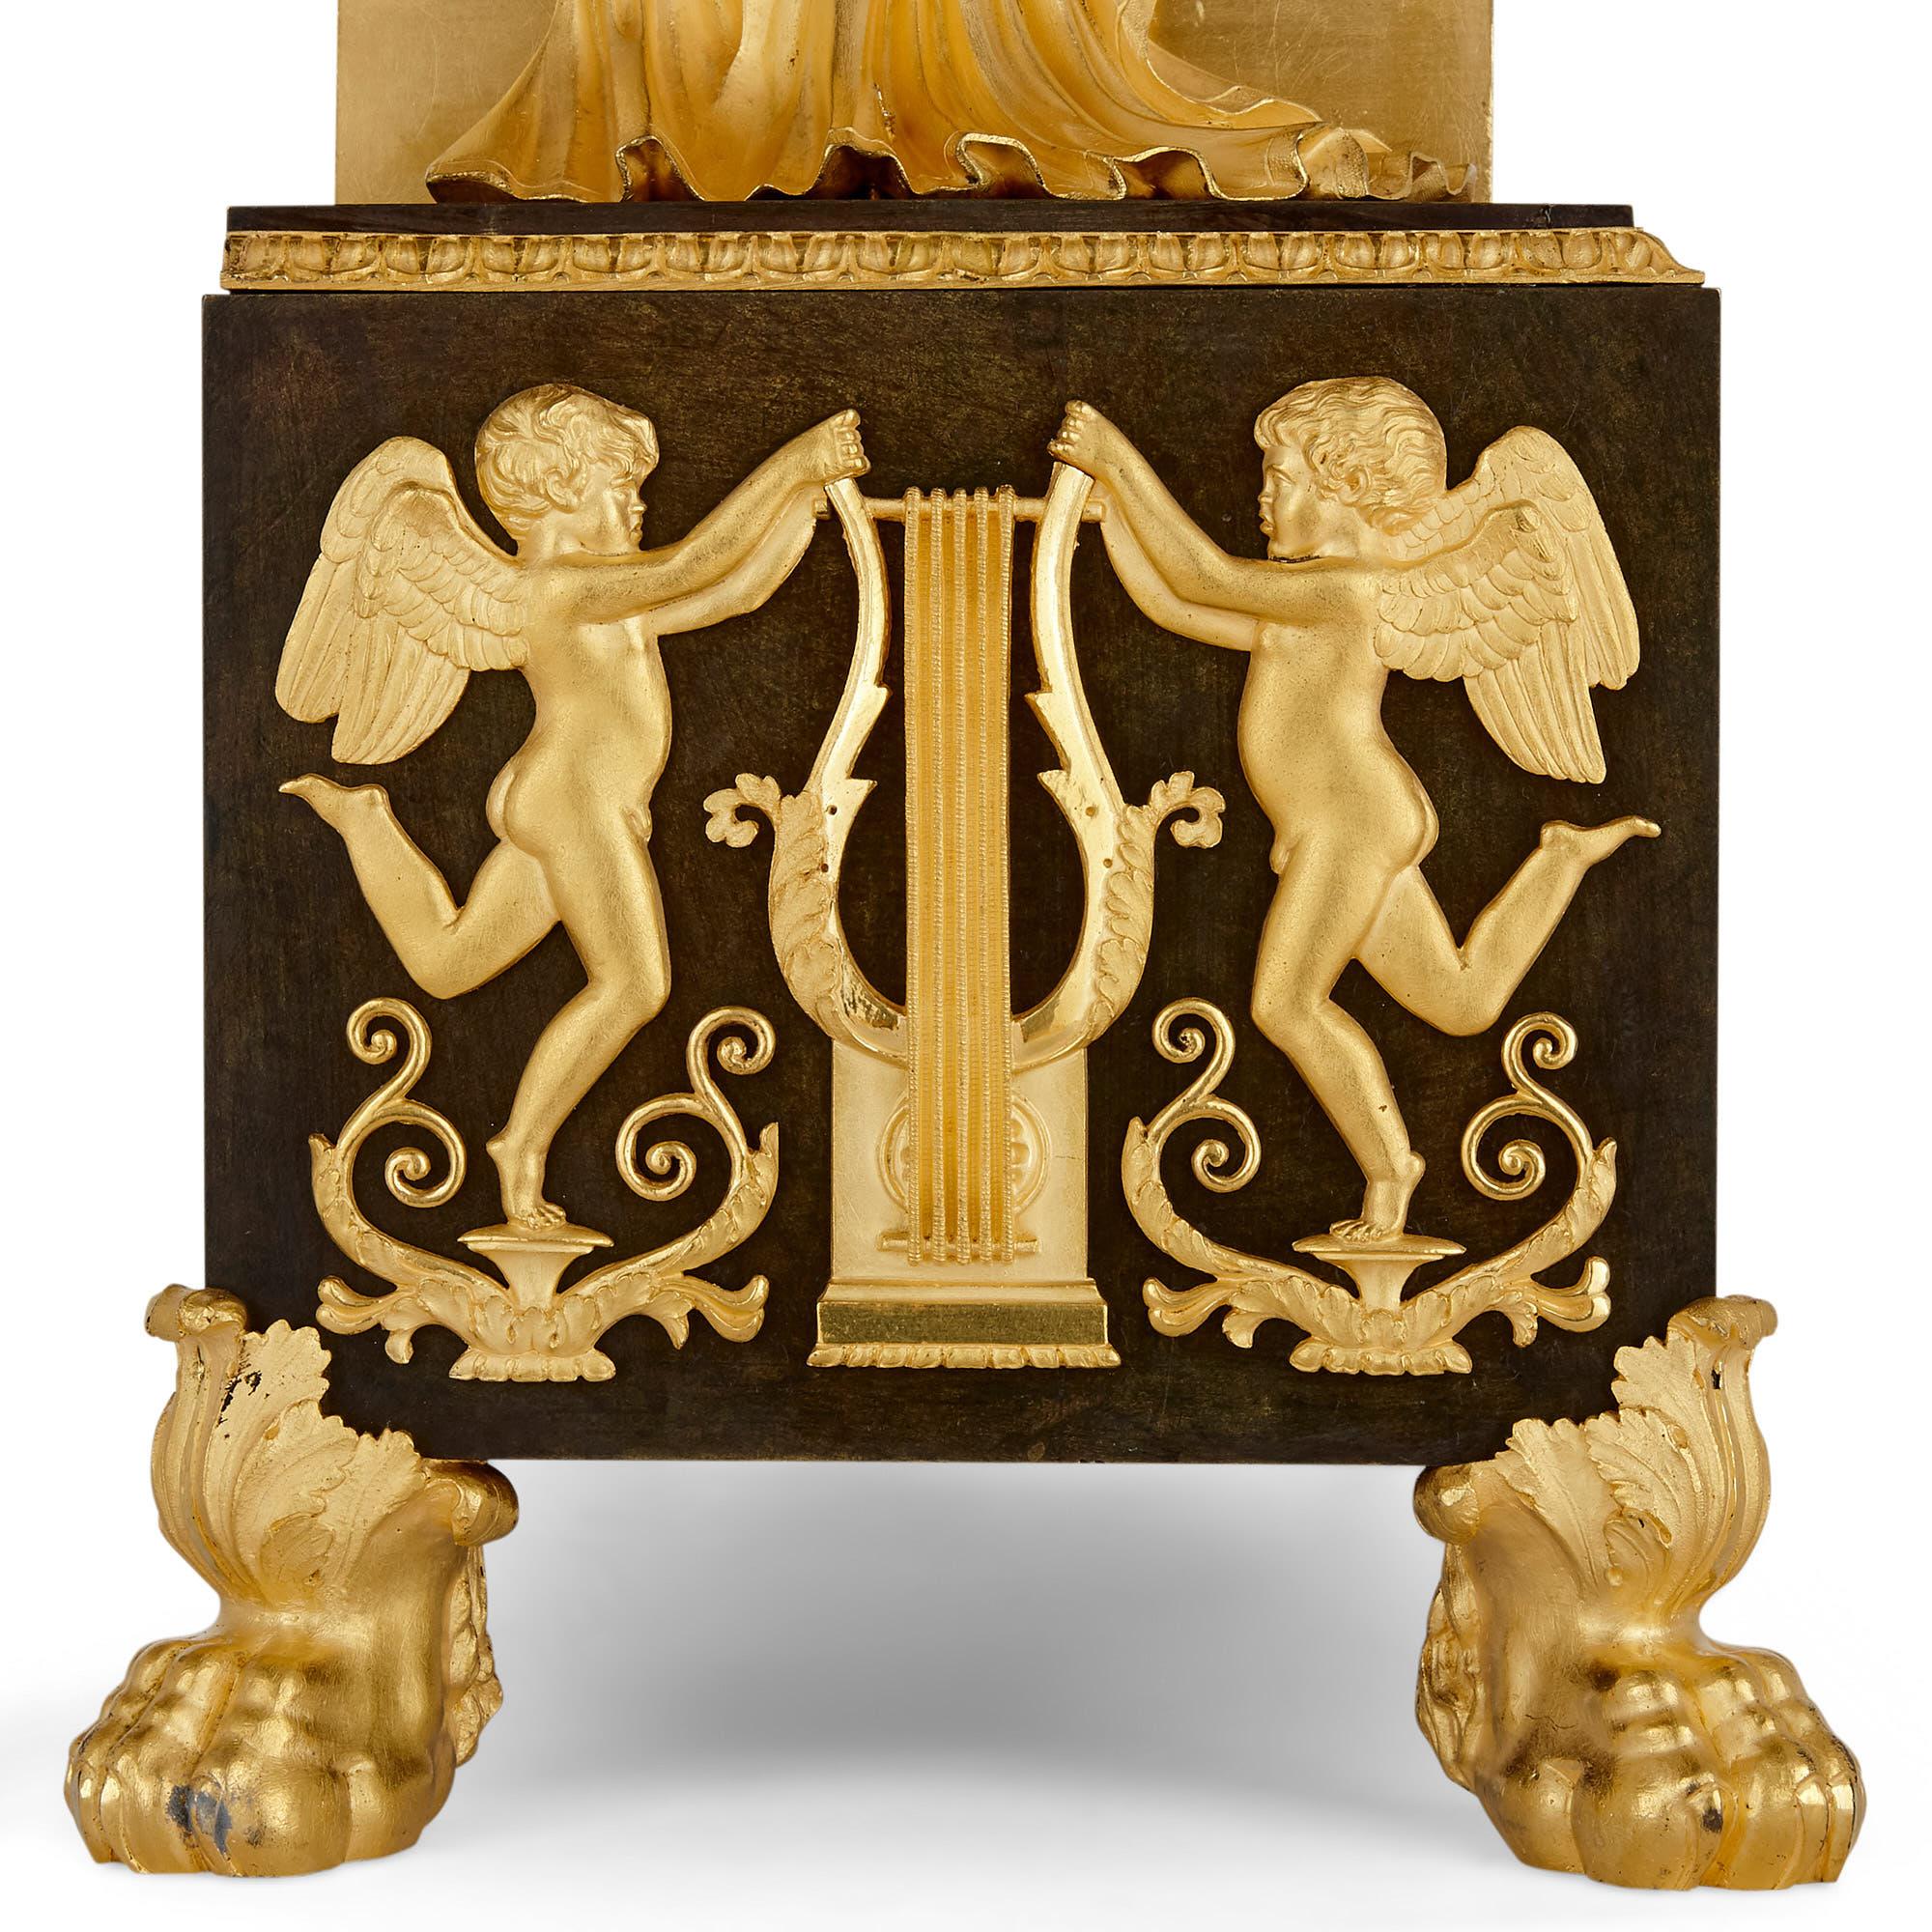 Bronze Antique Empire Period Neoclassical Style Mantel Clock